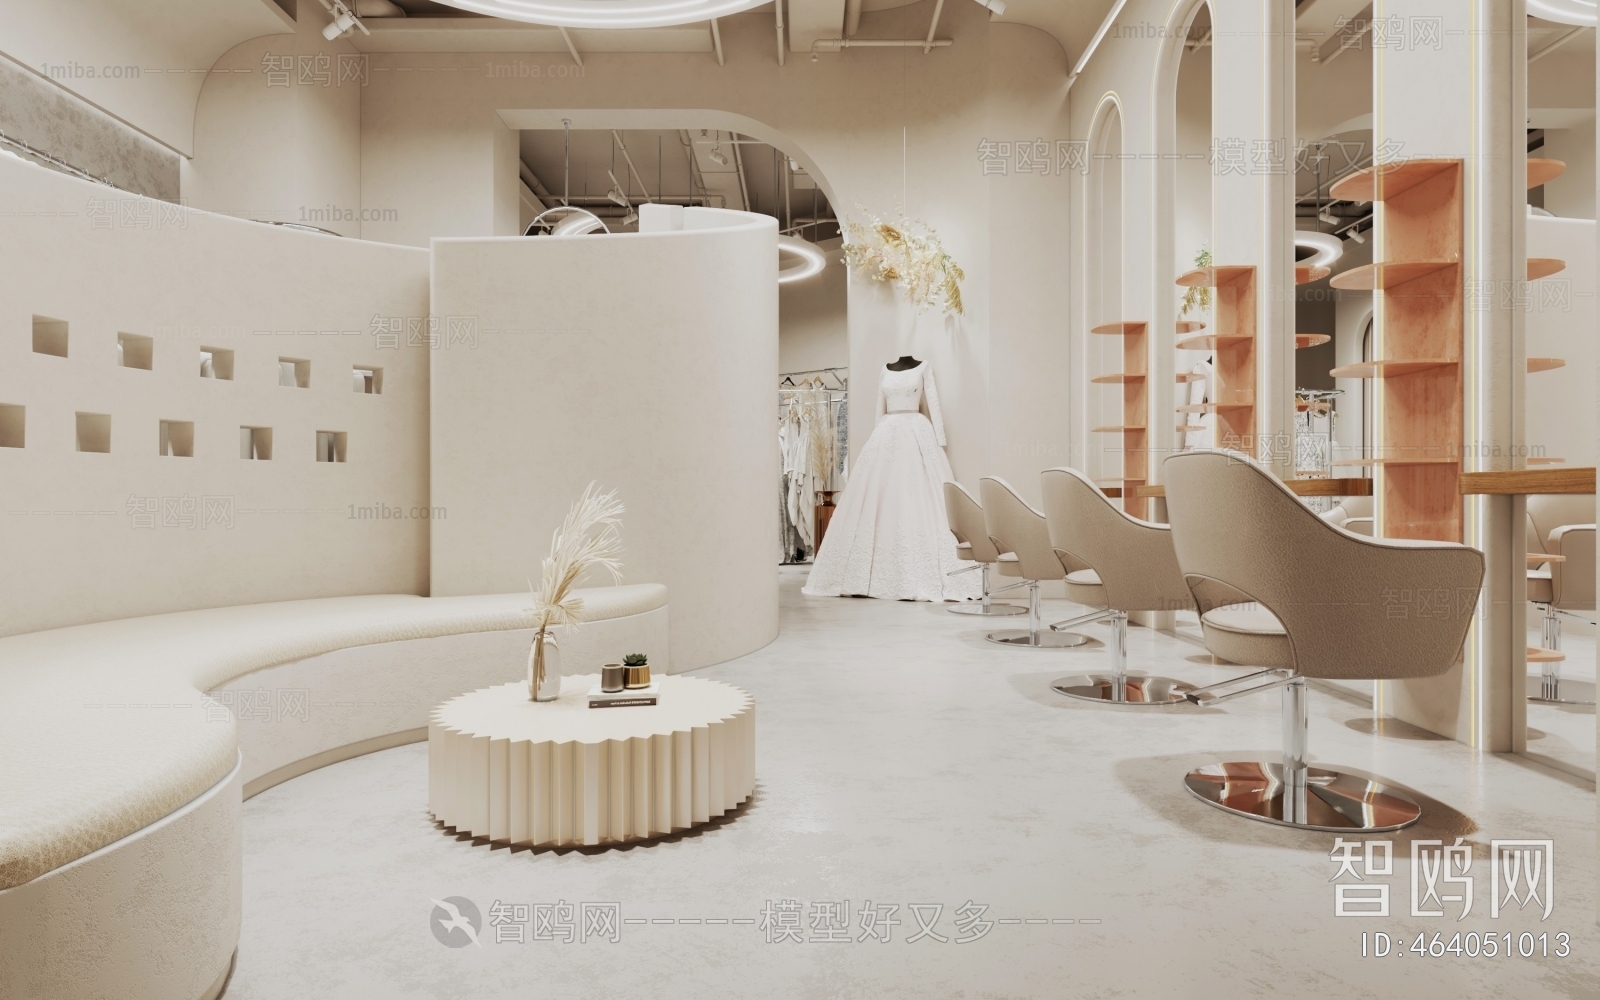 New Chinese Style Wedding Photography Shop